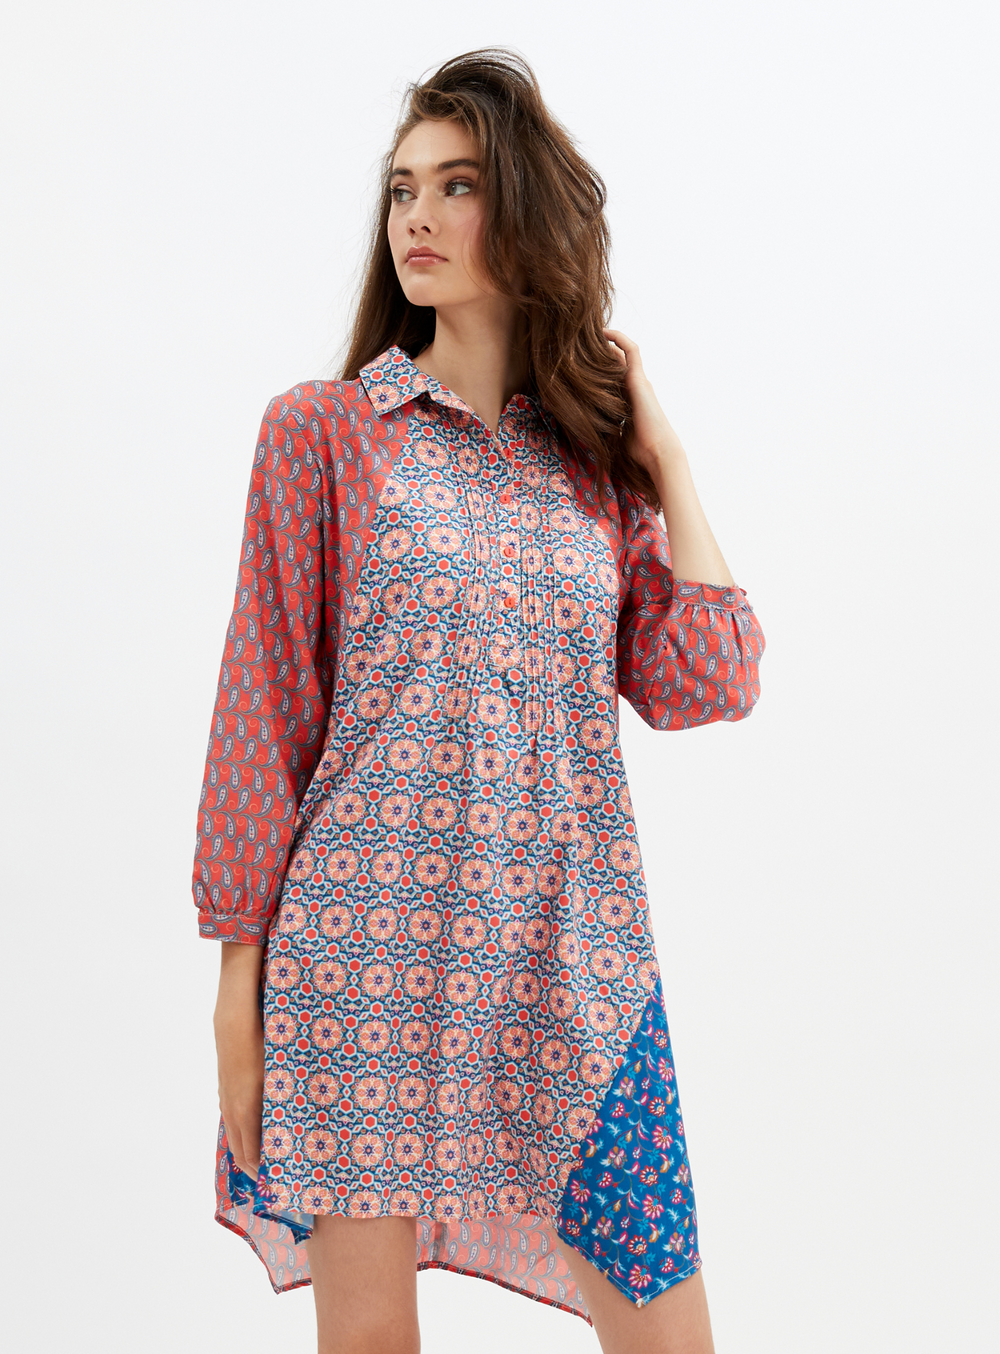 ROSEMARY| Buttoned Patterned Dress || ROSEMARY| Robe à Motifs Boutonnée